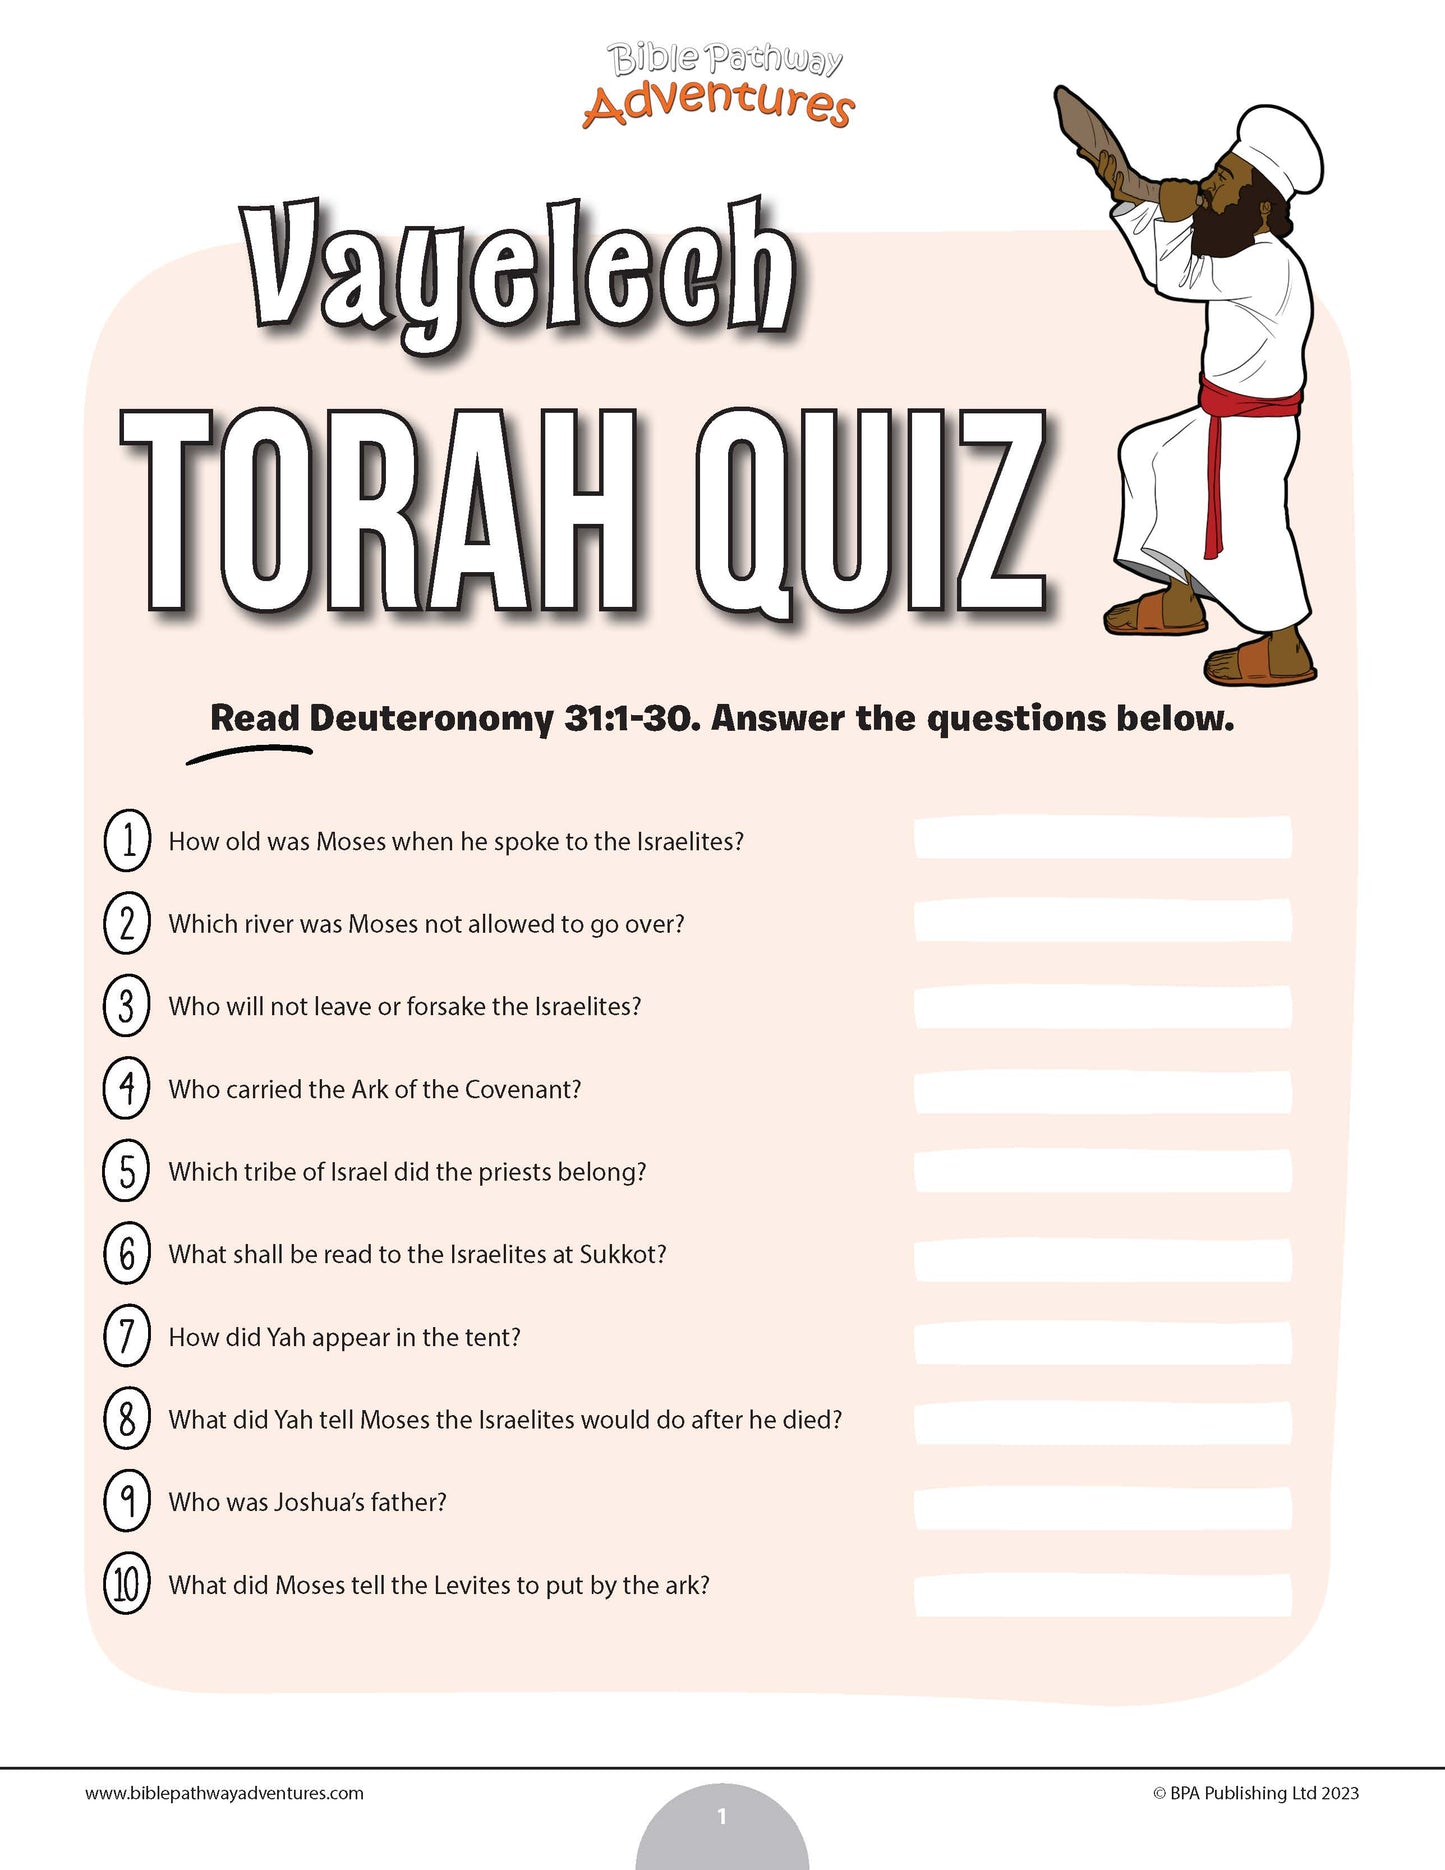 Vayelech Torah quiz (PDF)